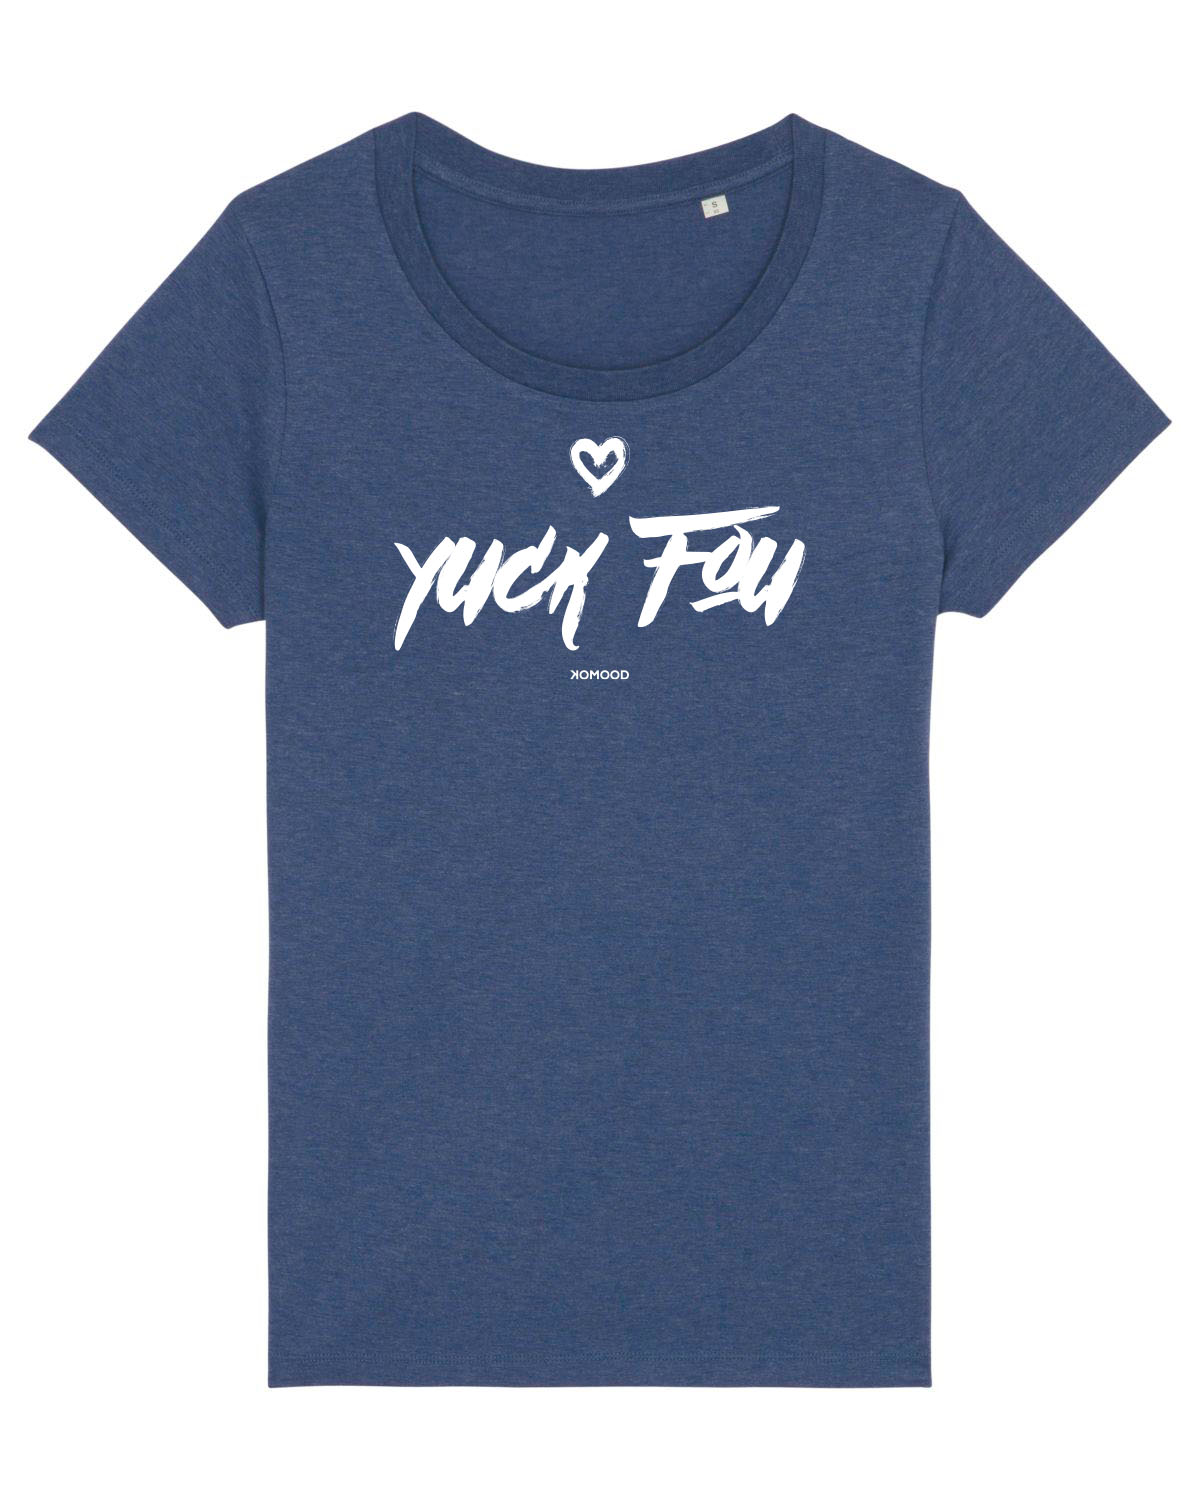 YuckFou! Unisex Premium T-Shirt